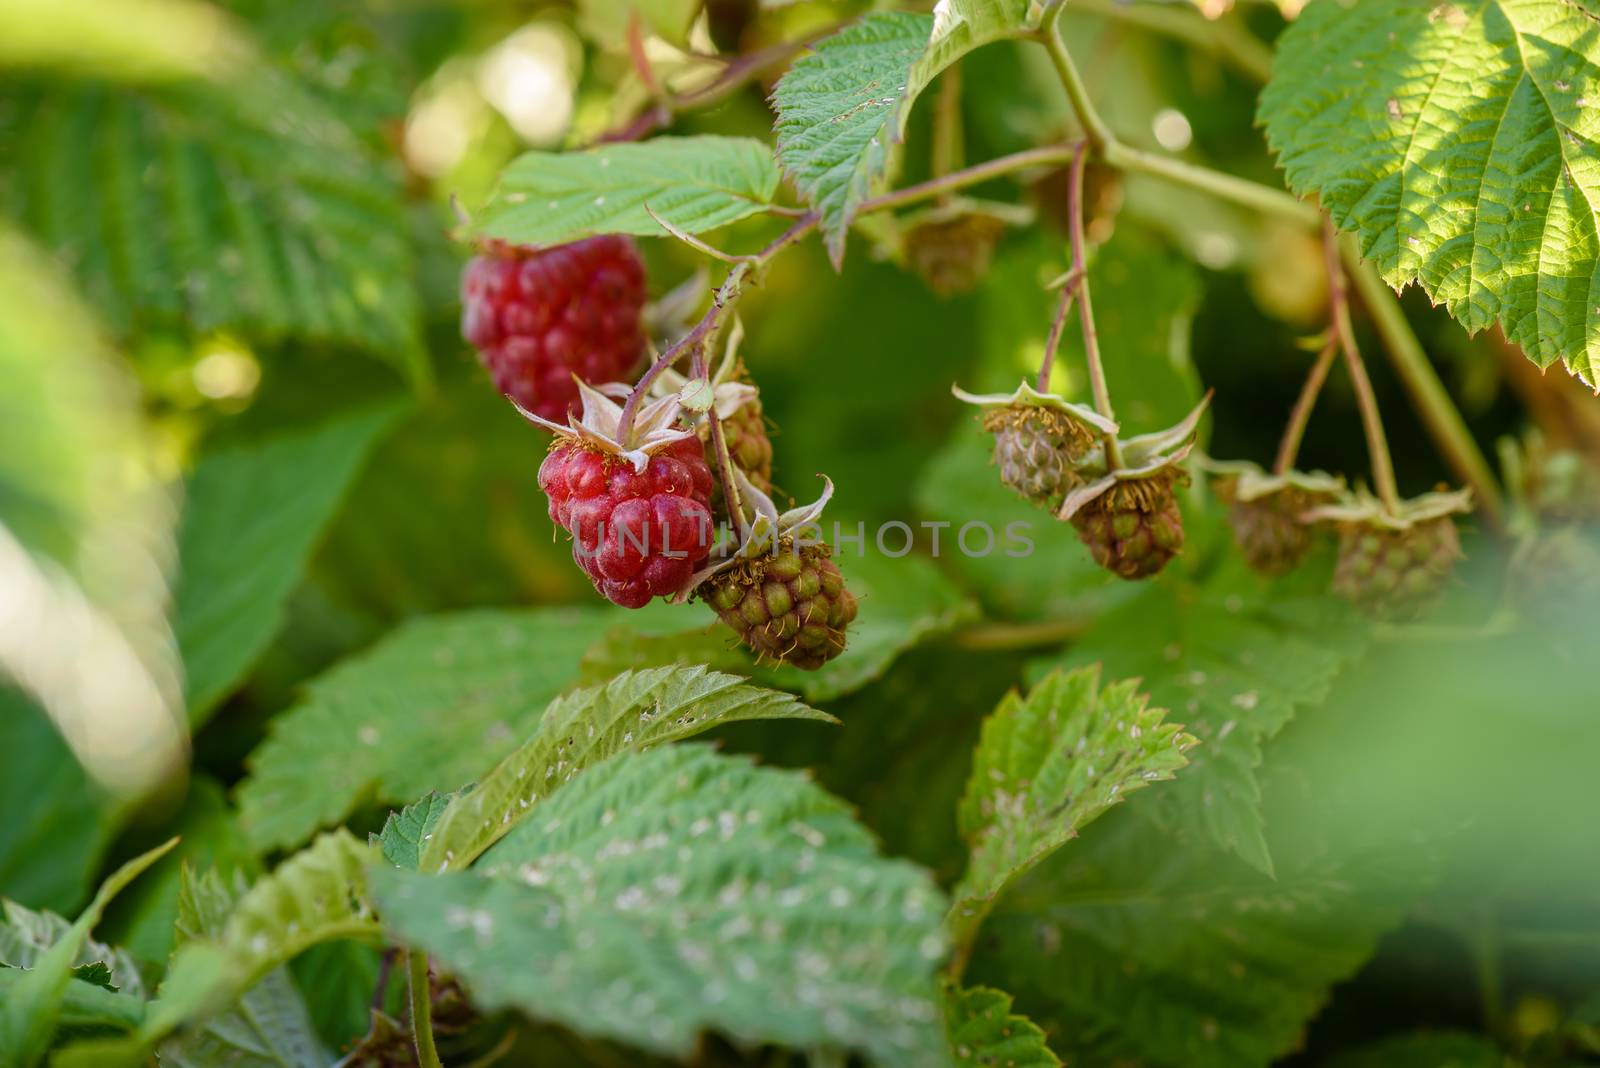 Raspberry bush with berries on branch in the garden by Seva_blsv